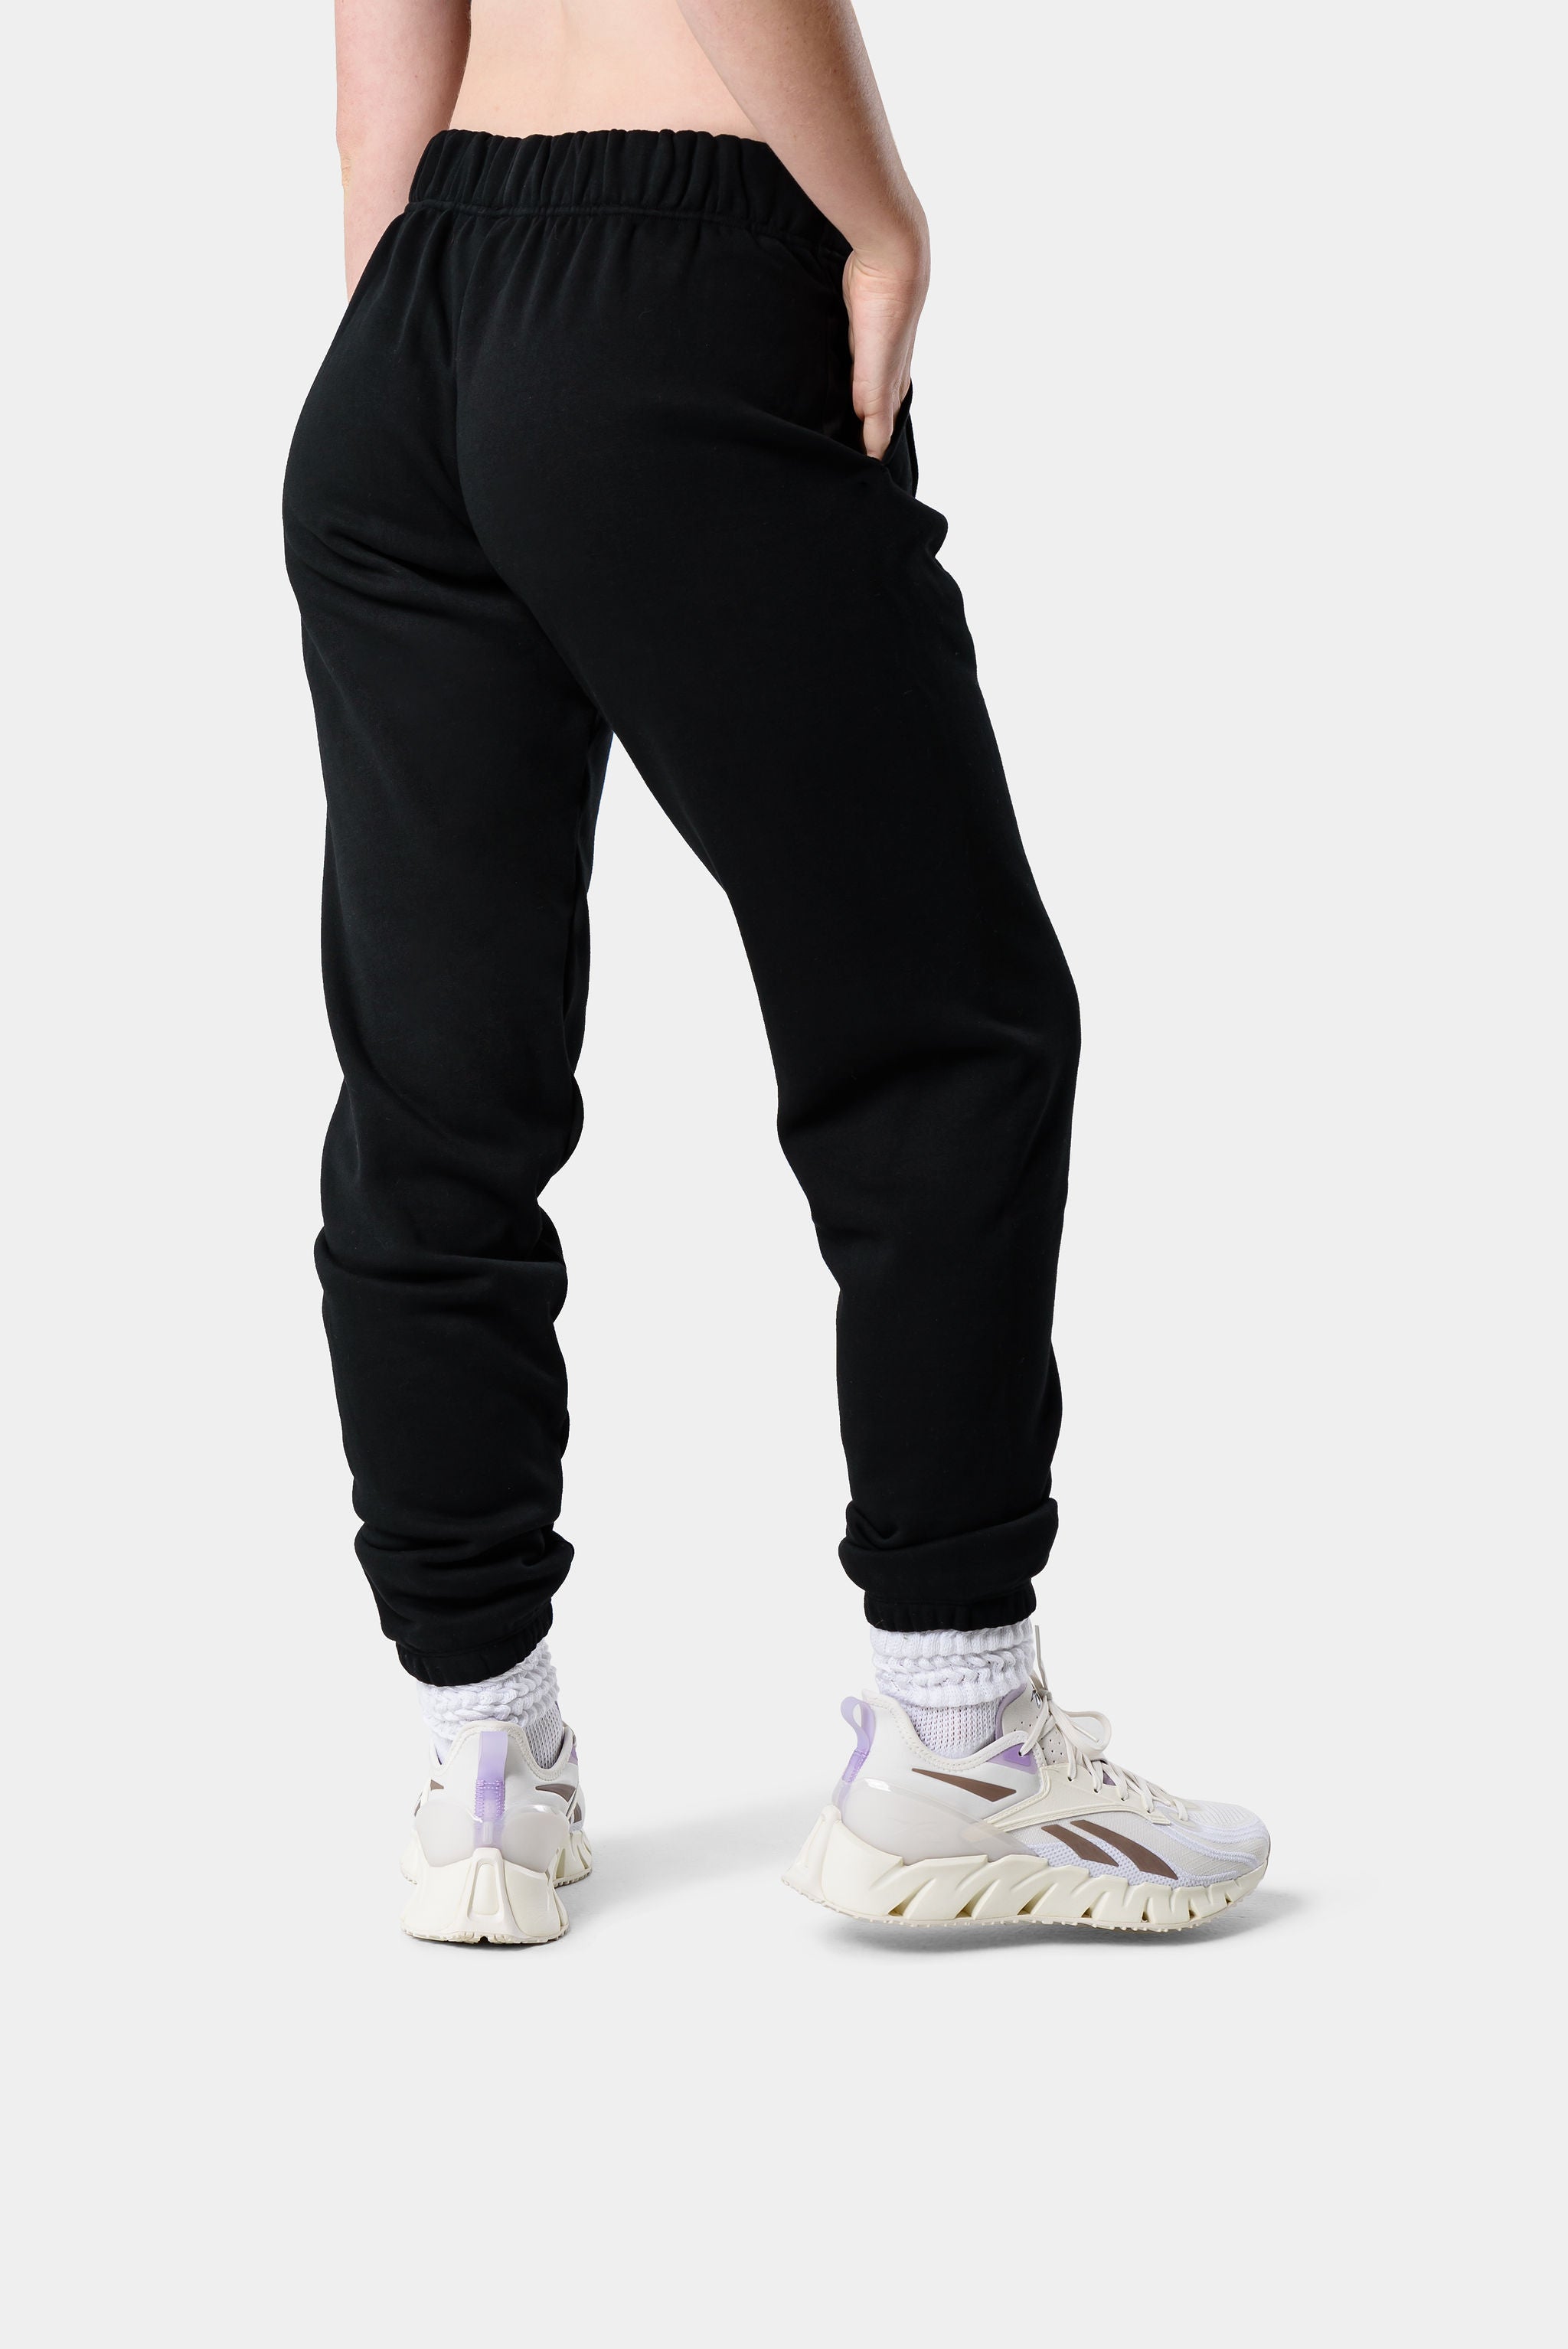 Kamo Fitness  CozyTec Sweatpants - Black